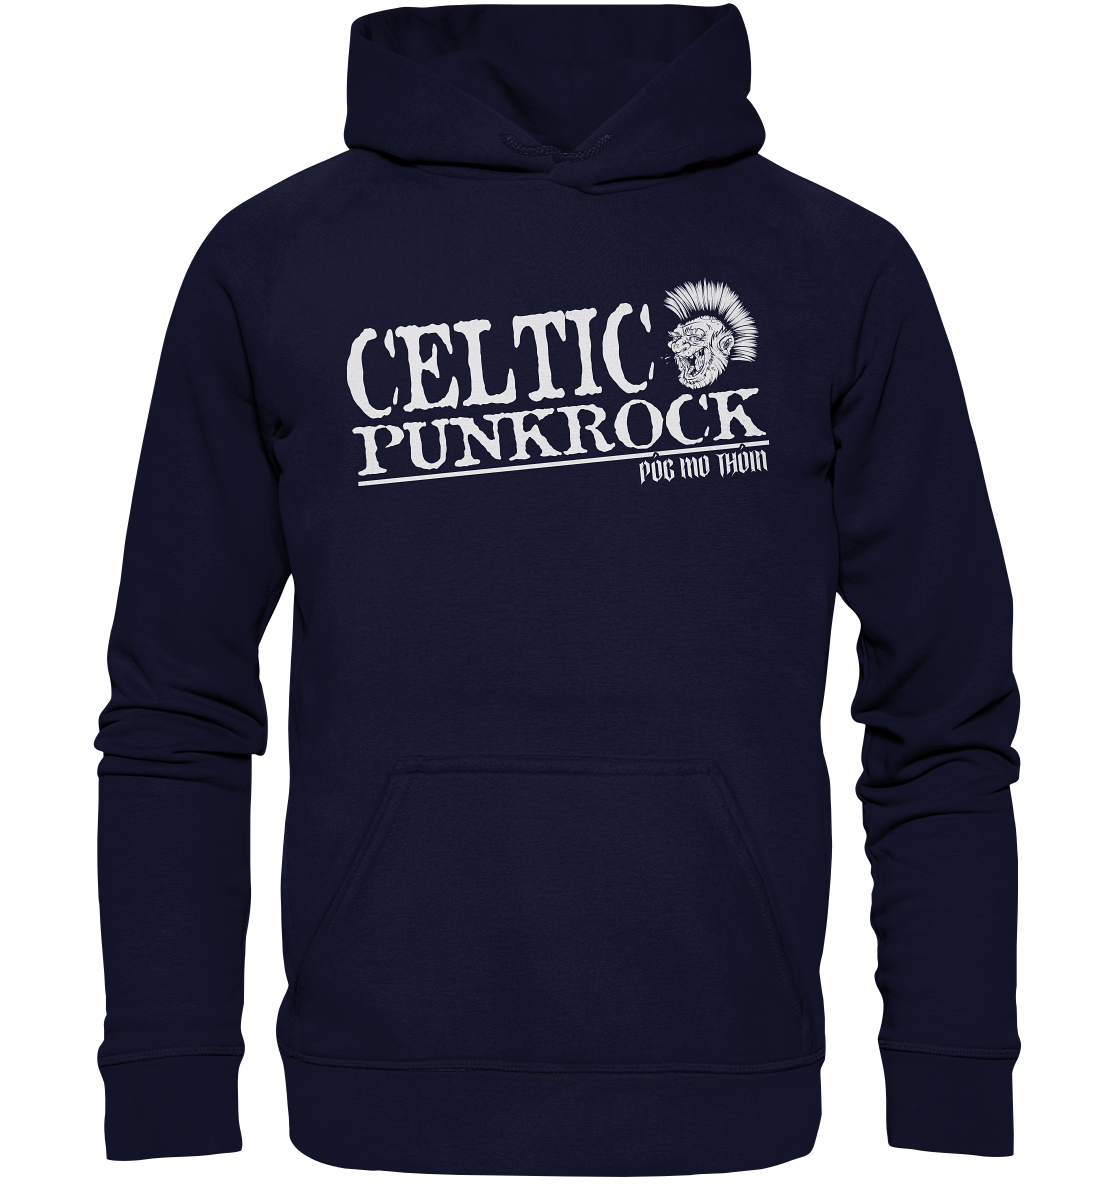 Póg Mo Thóin Streetwear "Celtic Punkrock" - Basic Unisex Hoodie